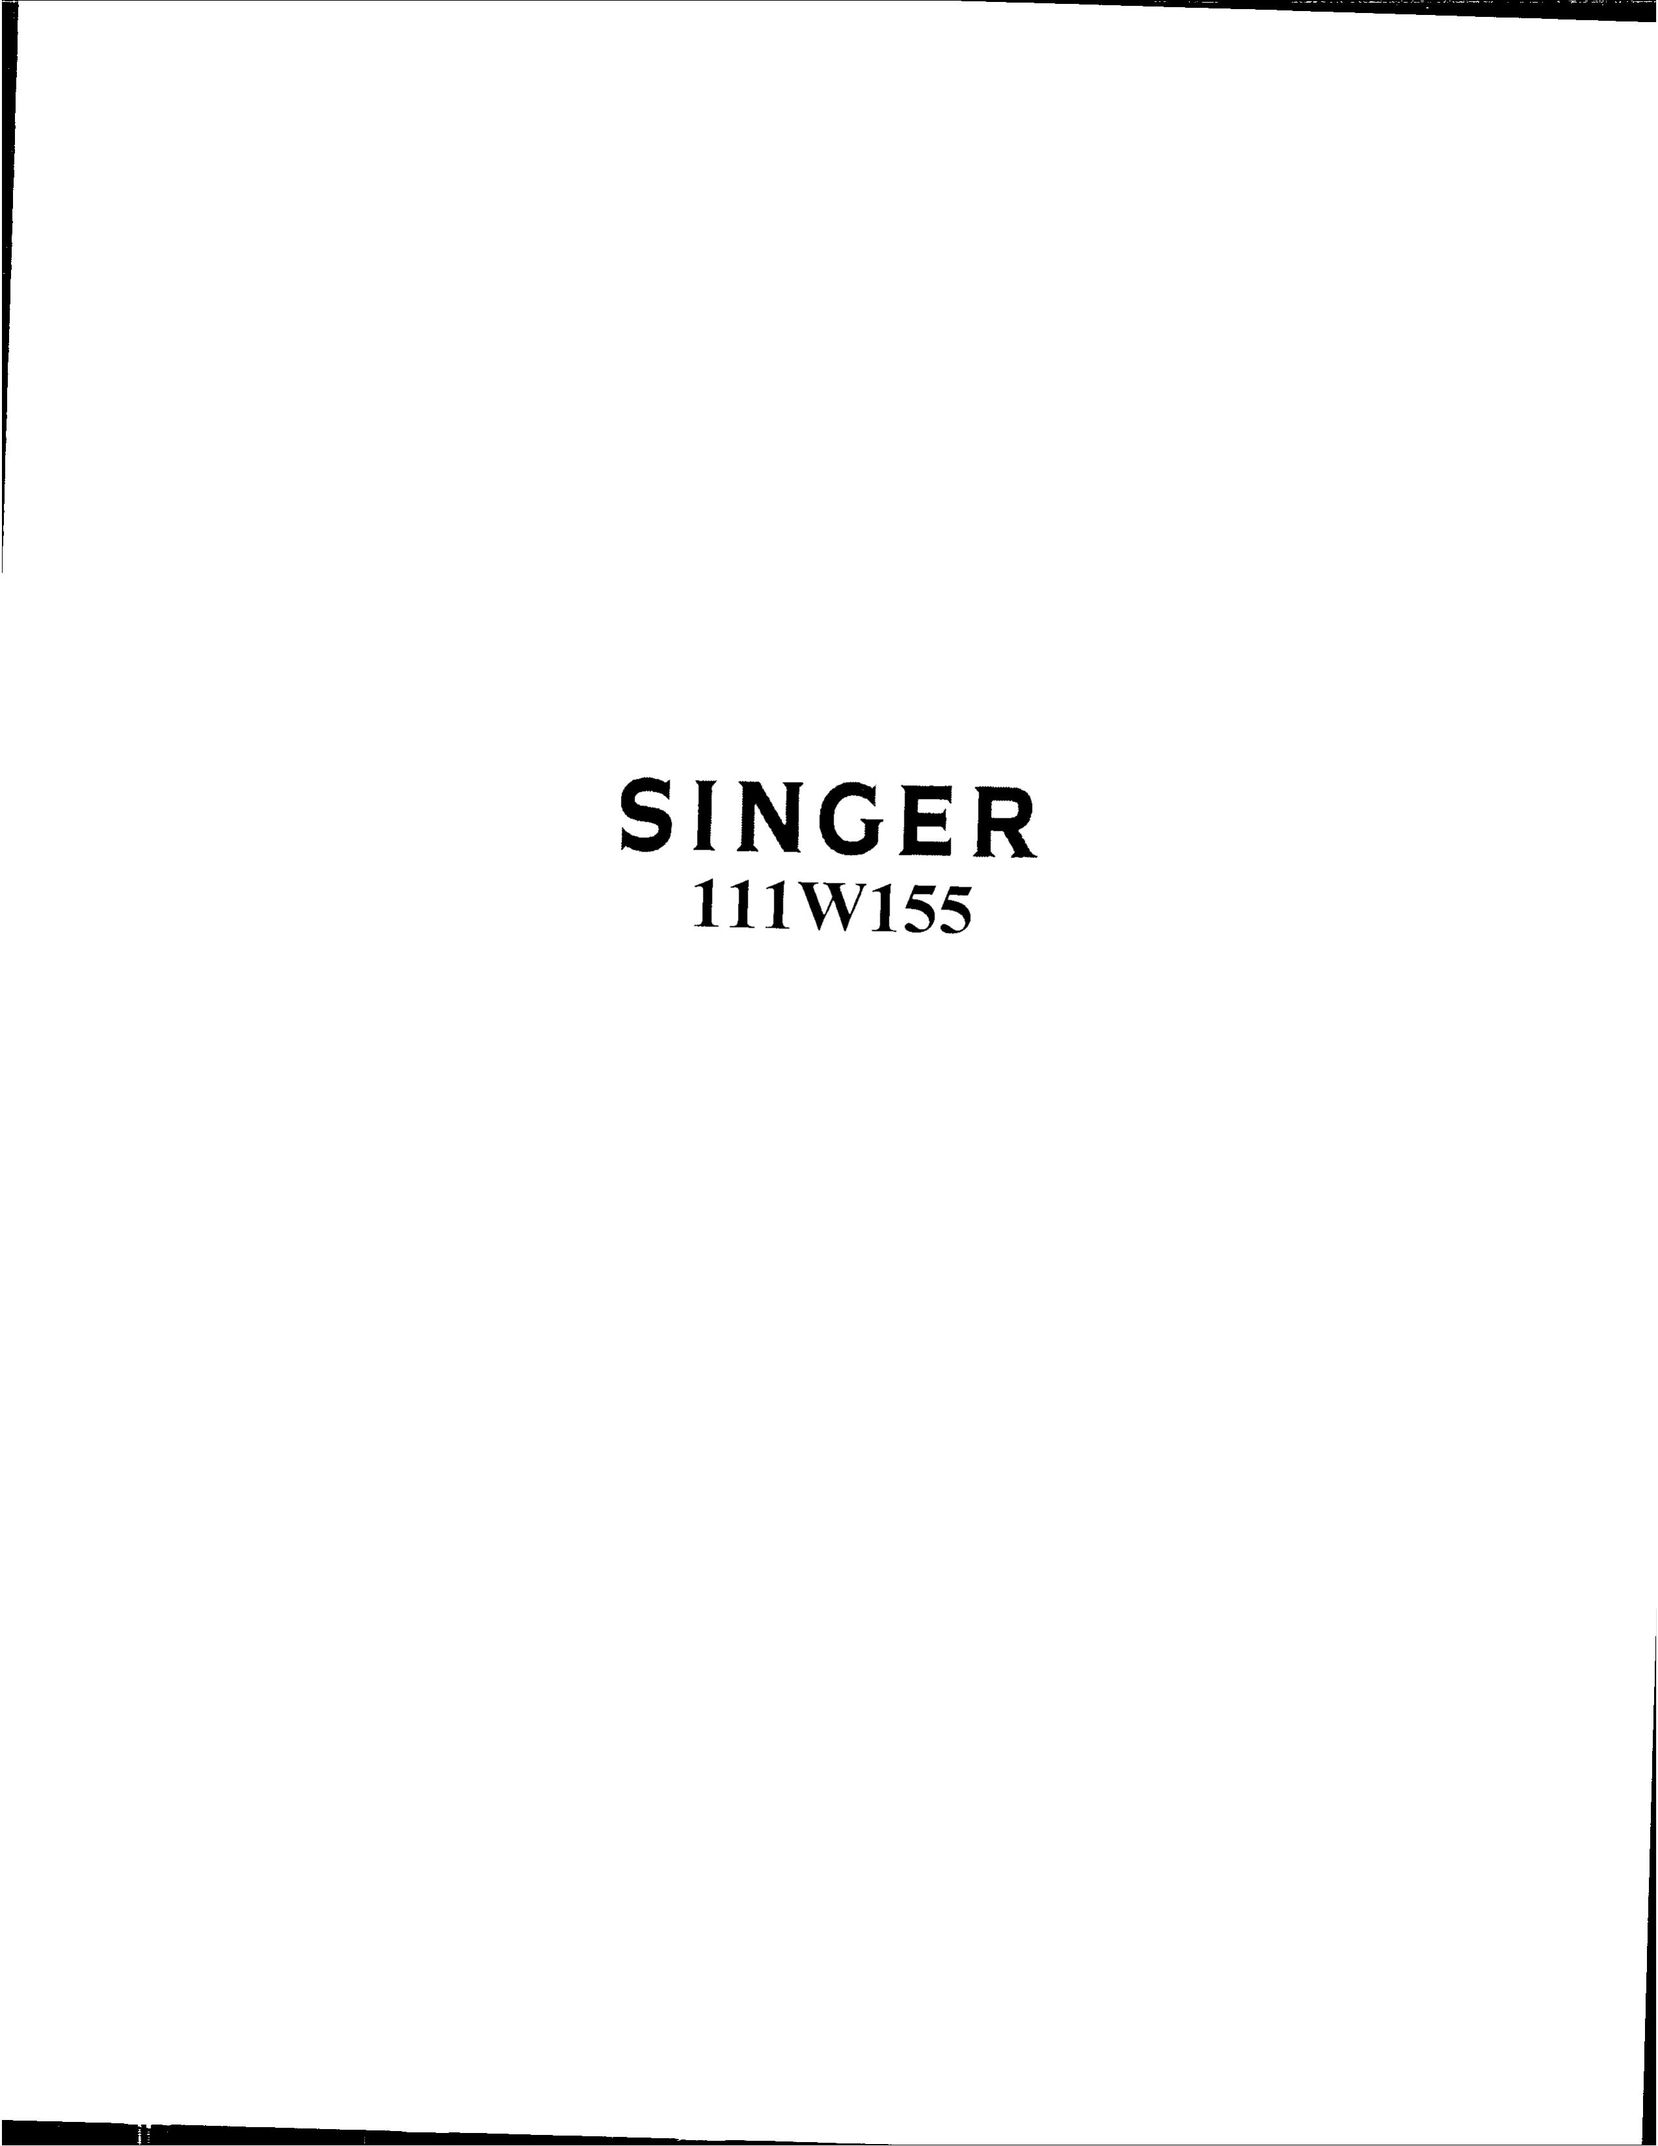 Singer 111W155 Sewing Machine User Manual (Page 1)